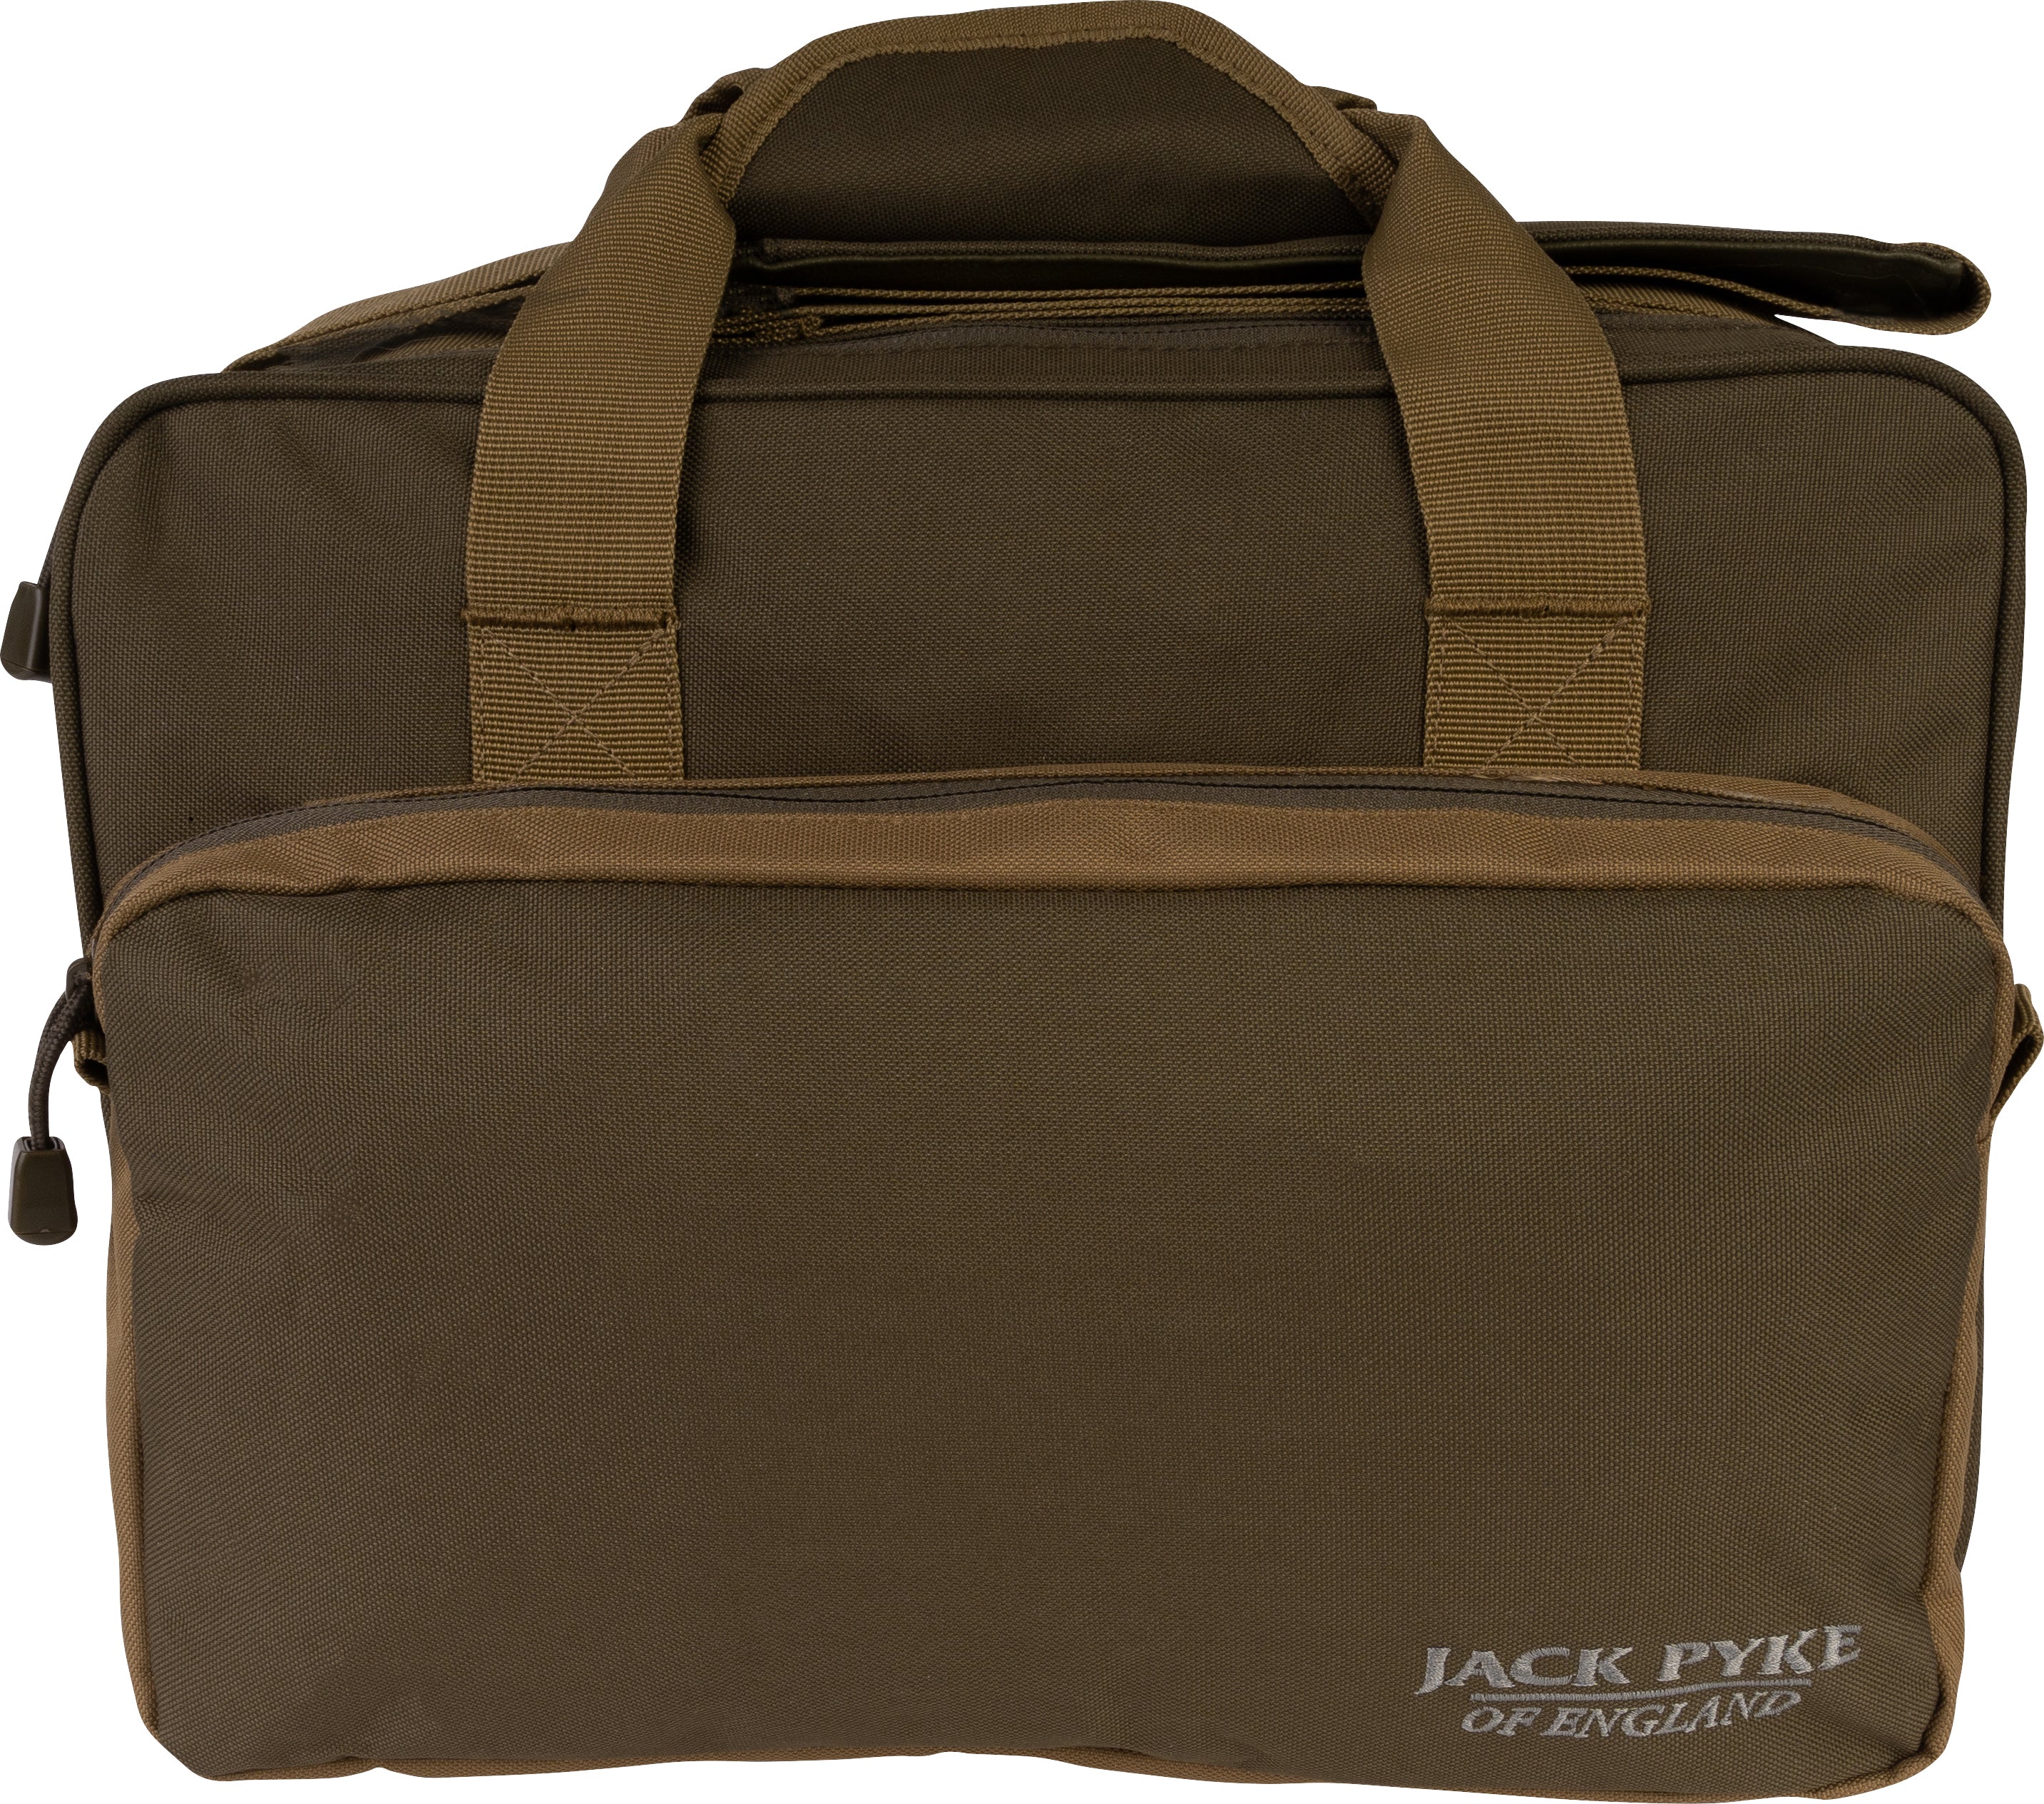 Jack Pyke Sporting Shoulder Bag in Brown 